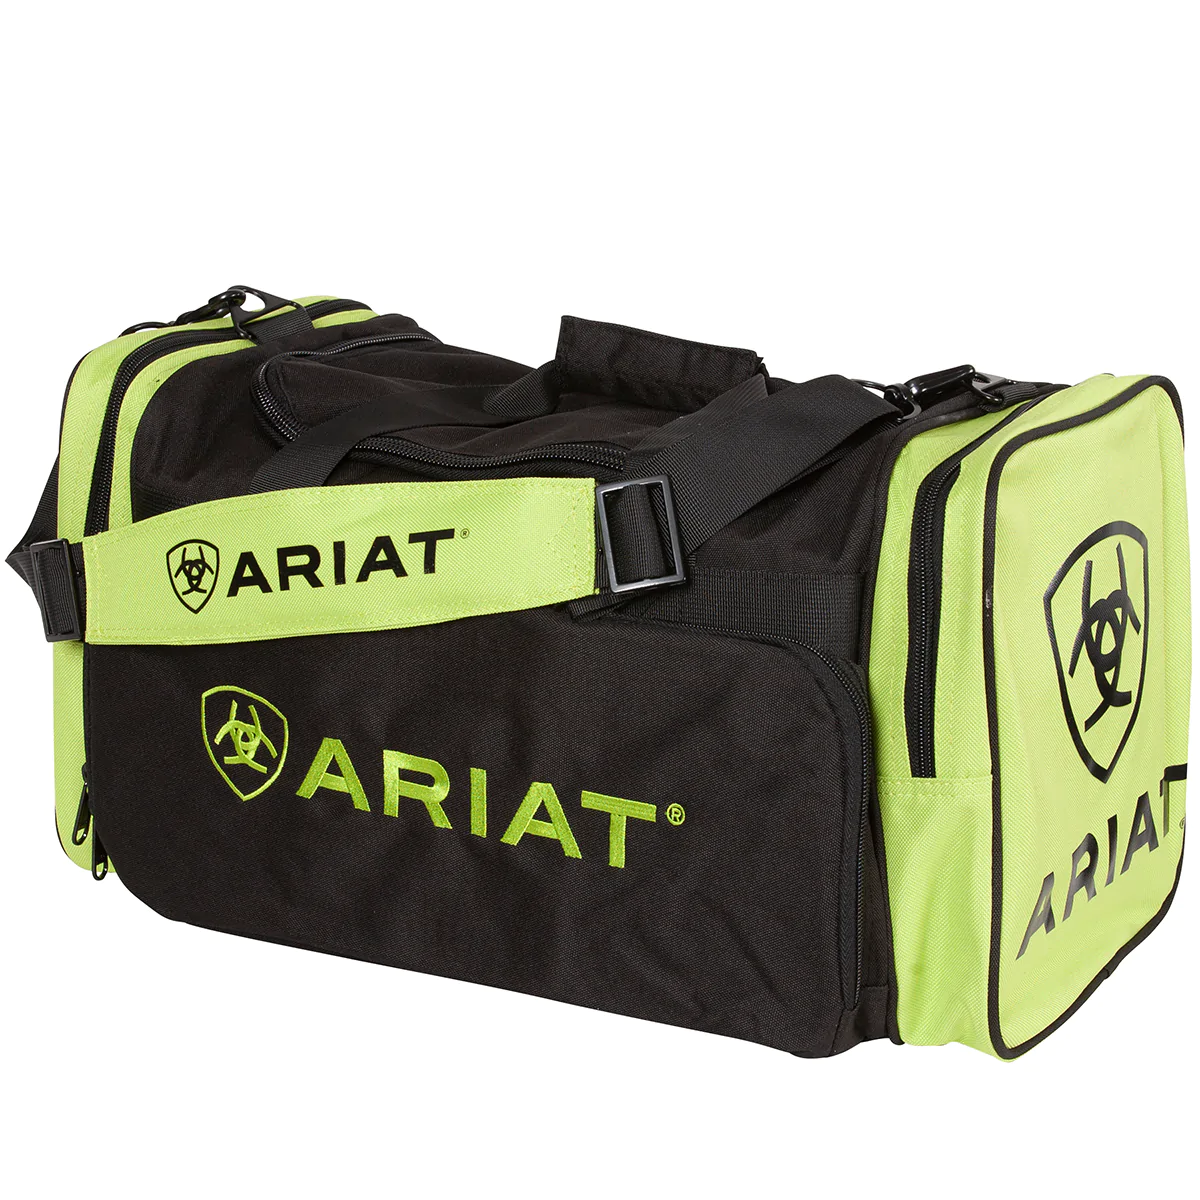 Ariat Gear Bag~ Green/Black